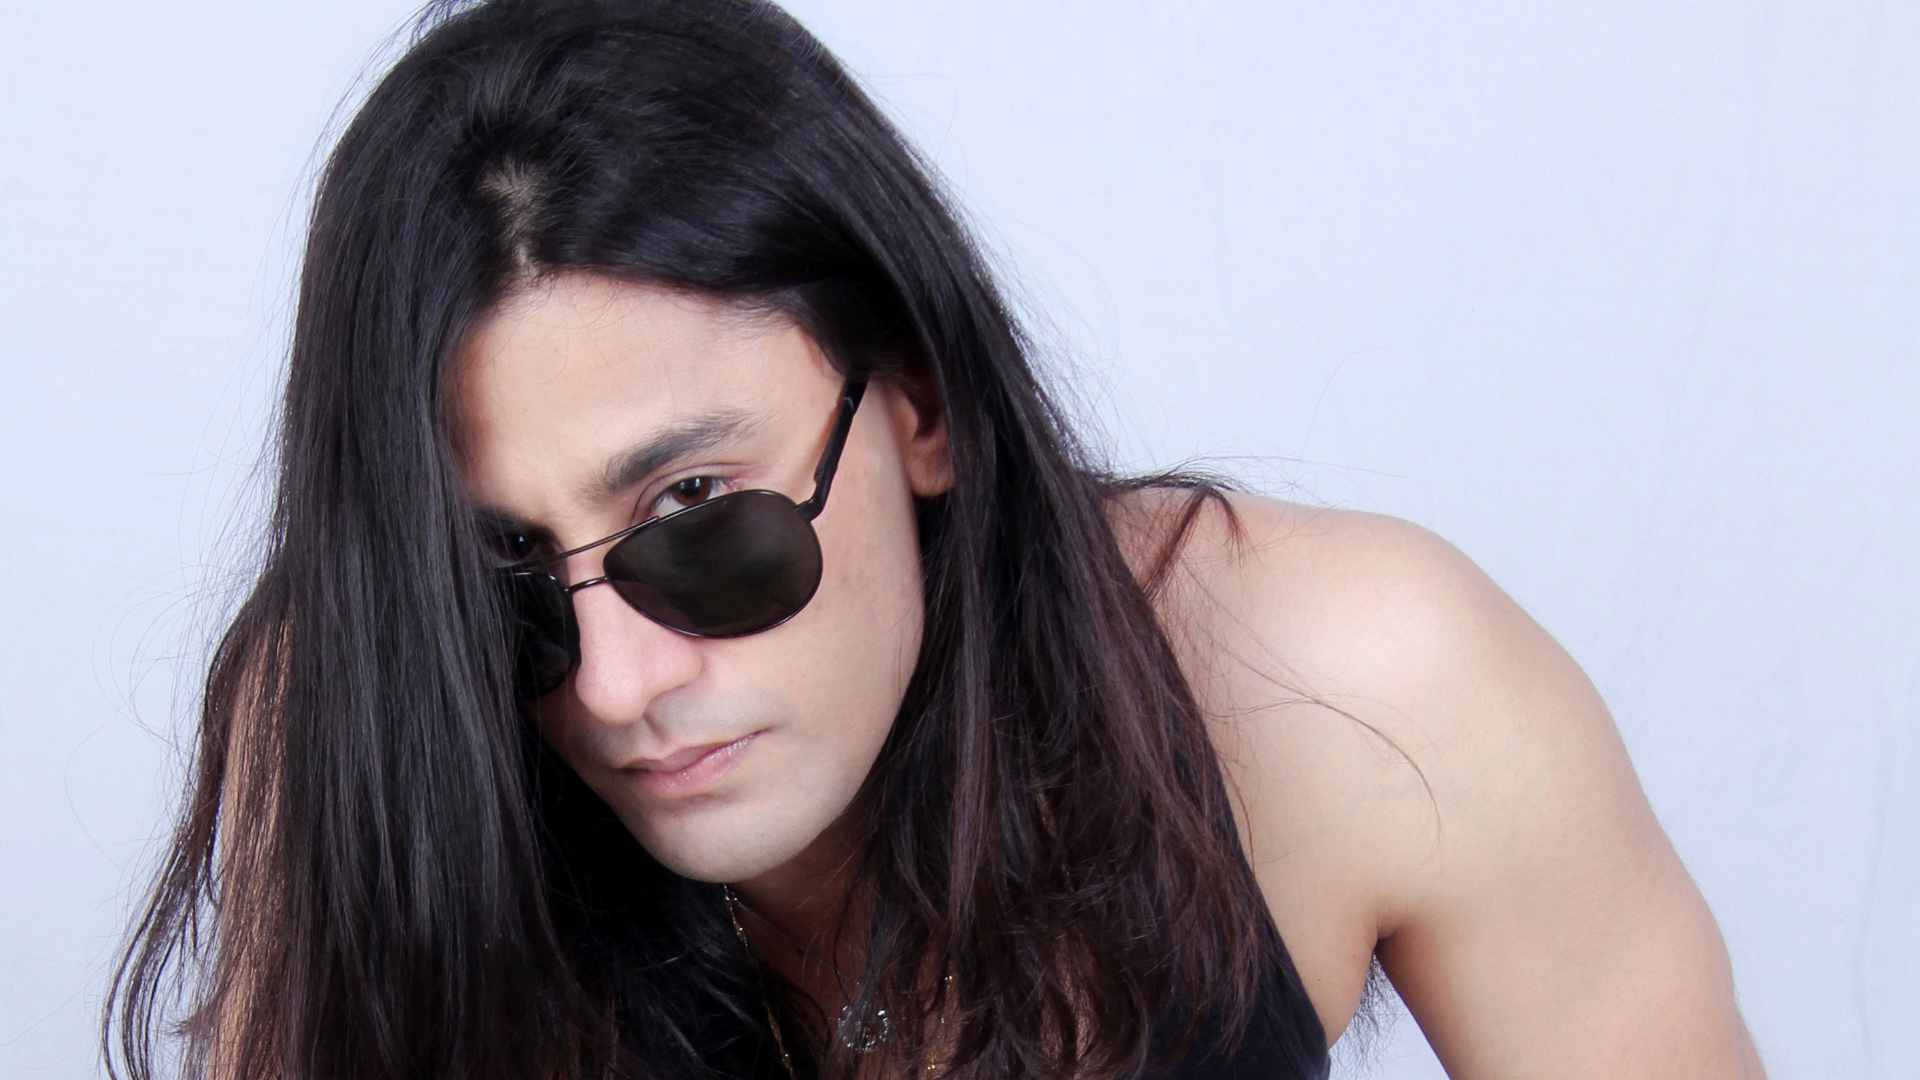 Rajkumar Patra Shades Men Dark Hair Gay 1920x1080